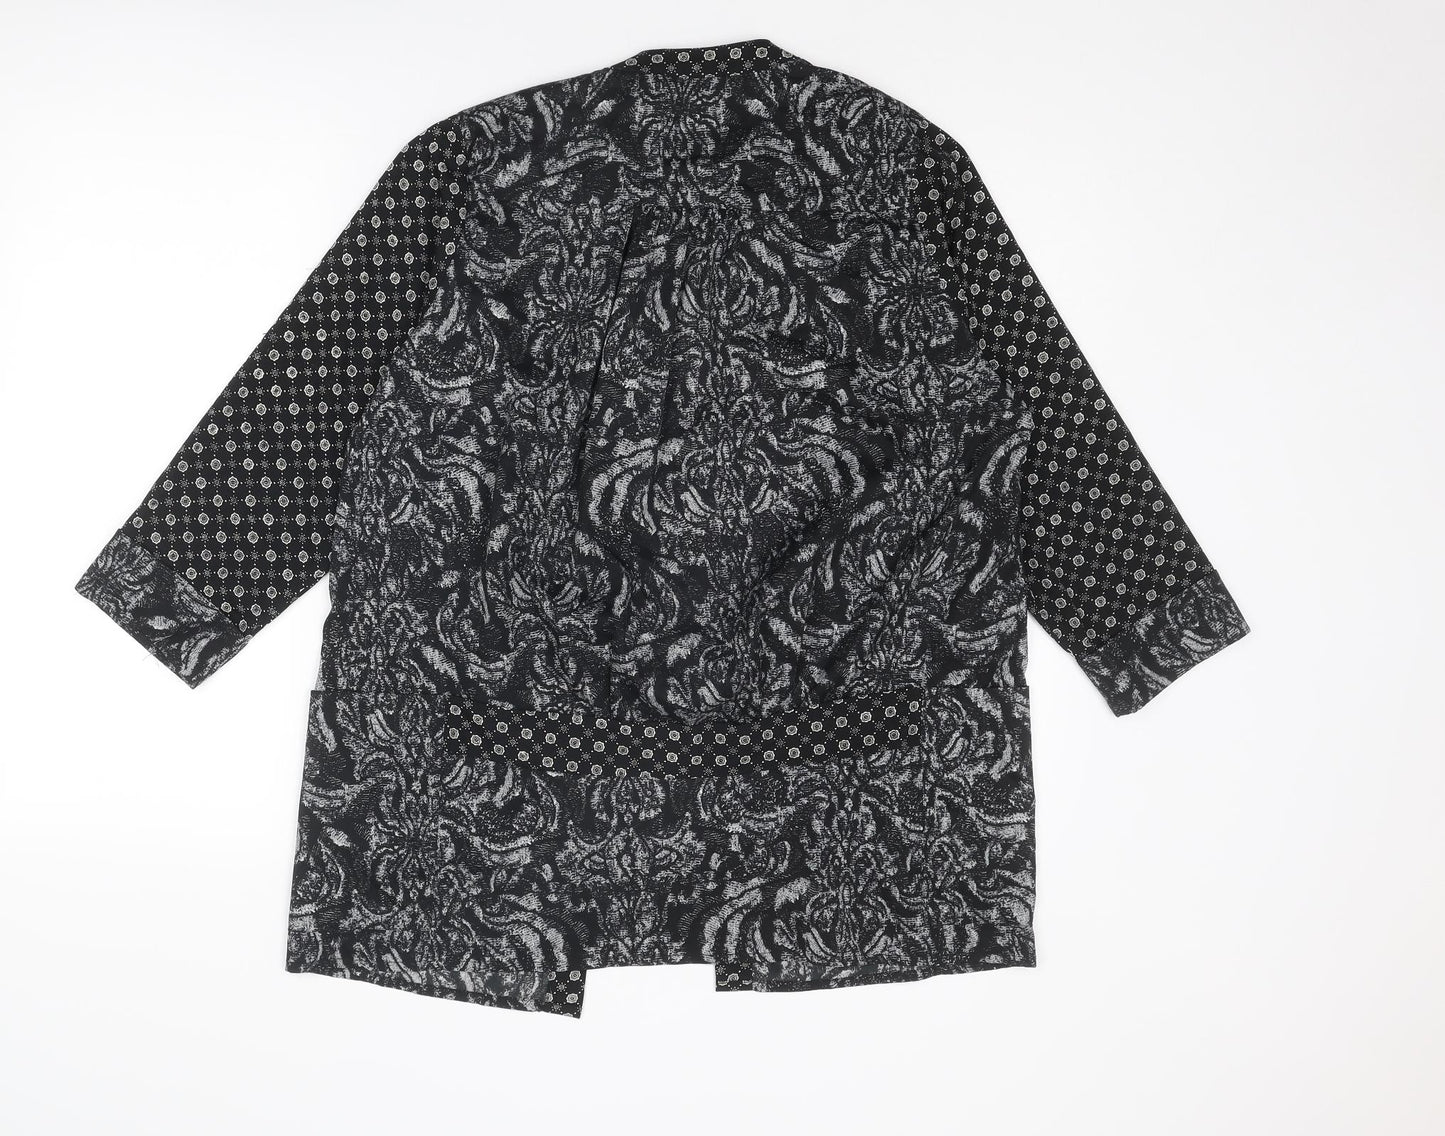 H&M Womens Black Geometric Polyester Kimono Blouse Size 8 V-Neck